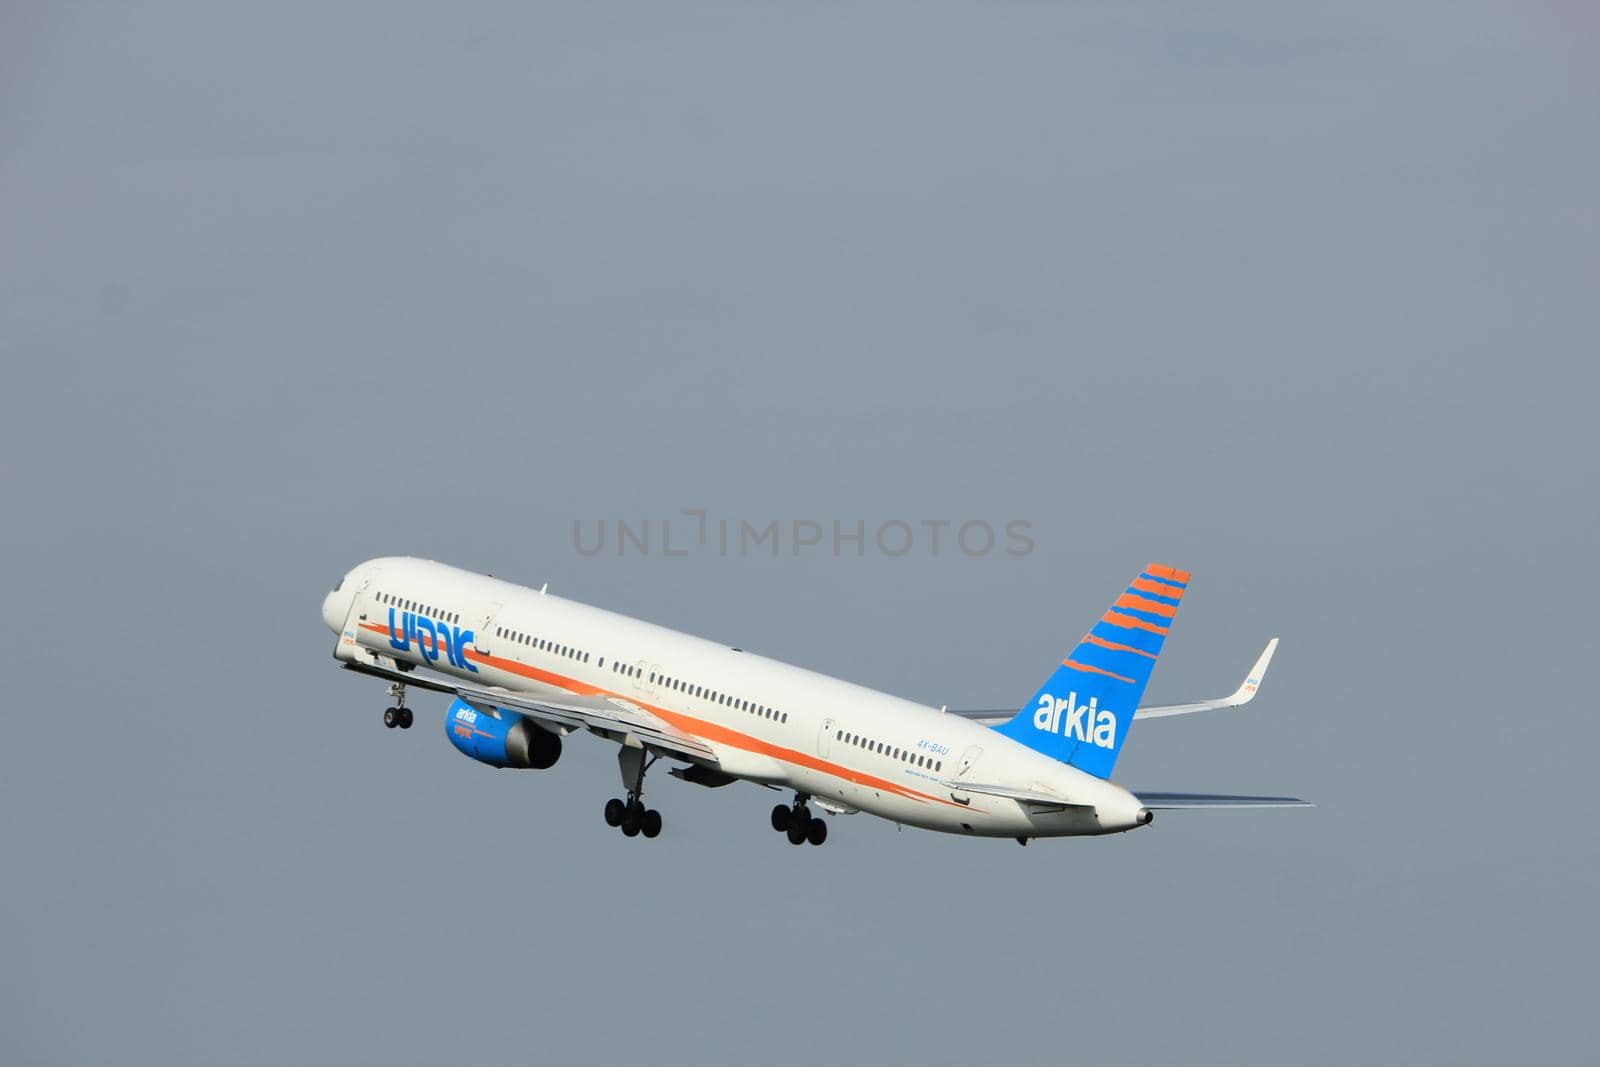 Amsterdam, the Netherlands  -  June 2nd, 2017: 4X-BAU Arkia - Israeli Airlines Boeing 757 taking off from Polderbaan Runway Amsterdam Airport Schiphol